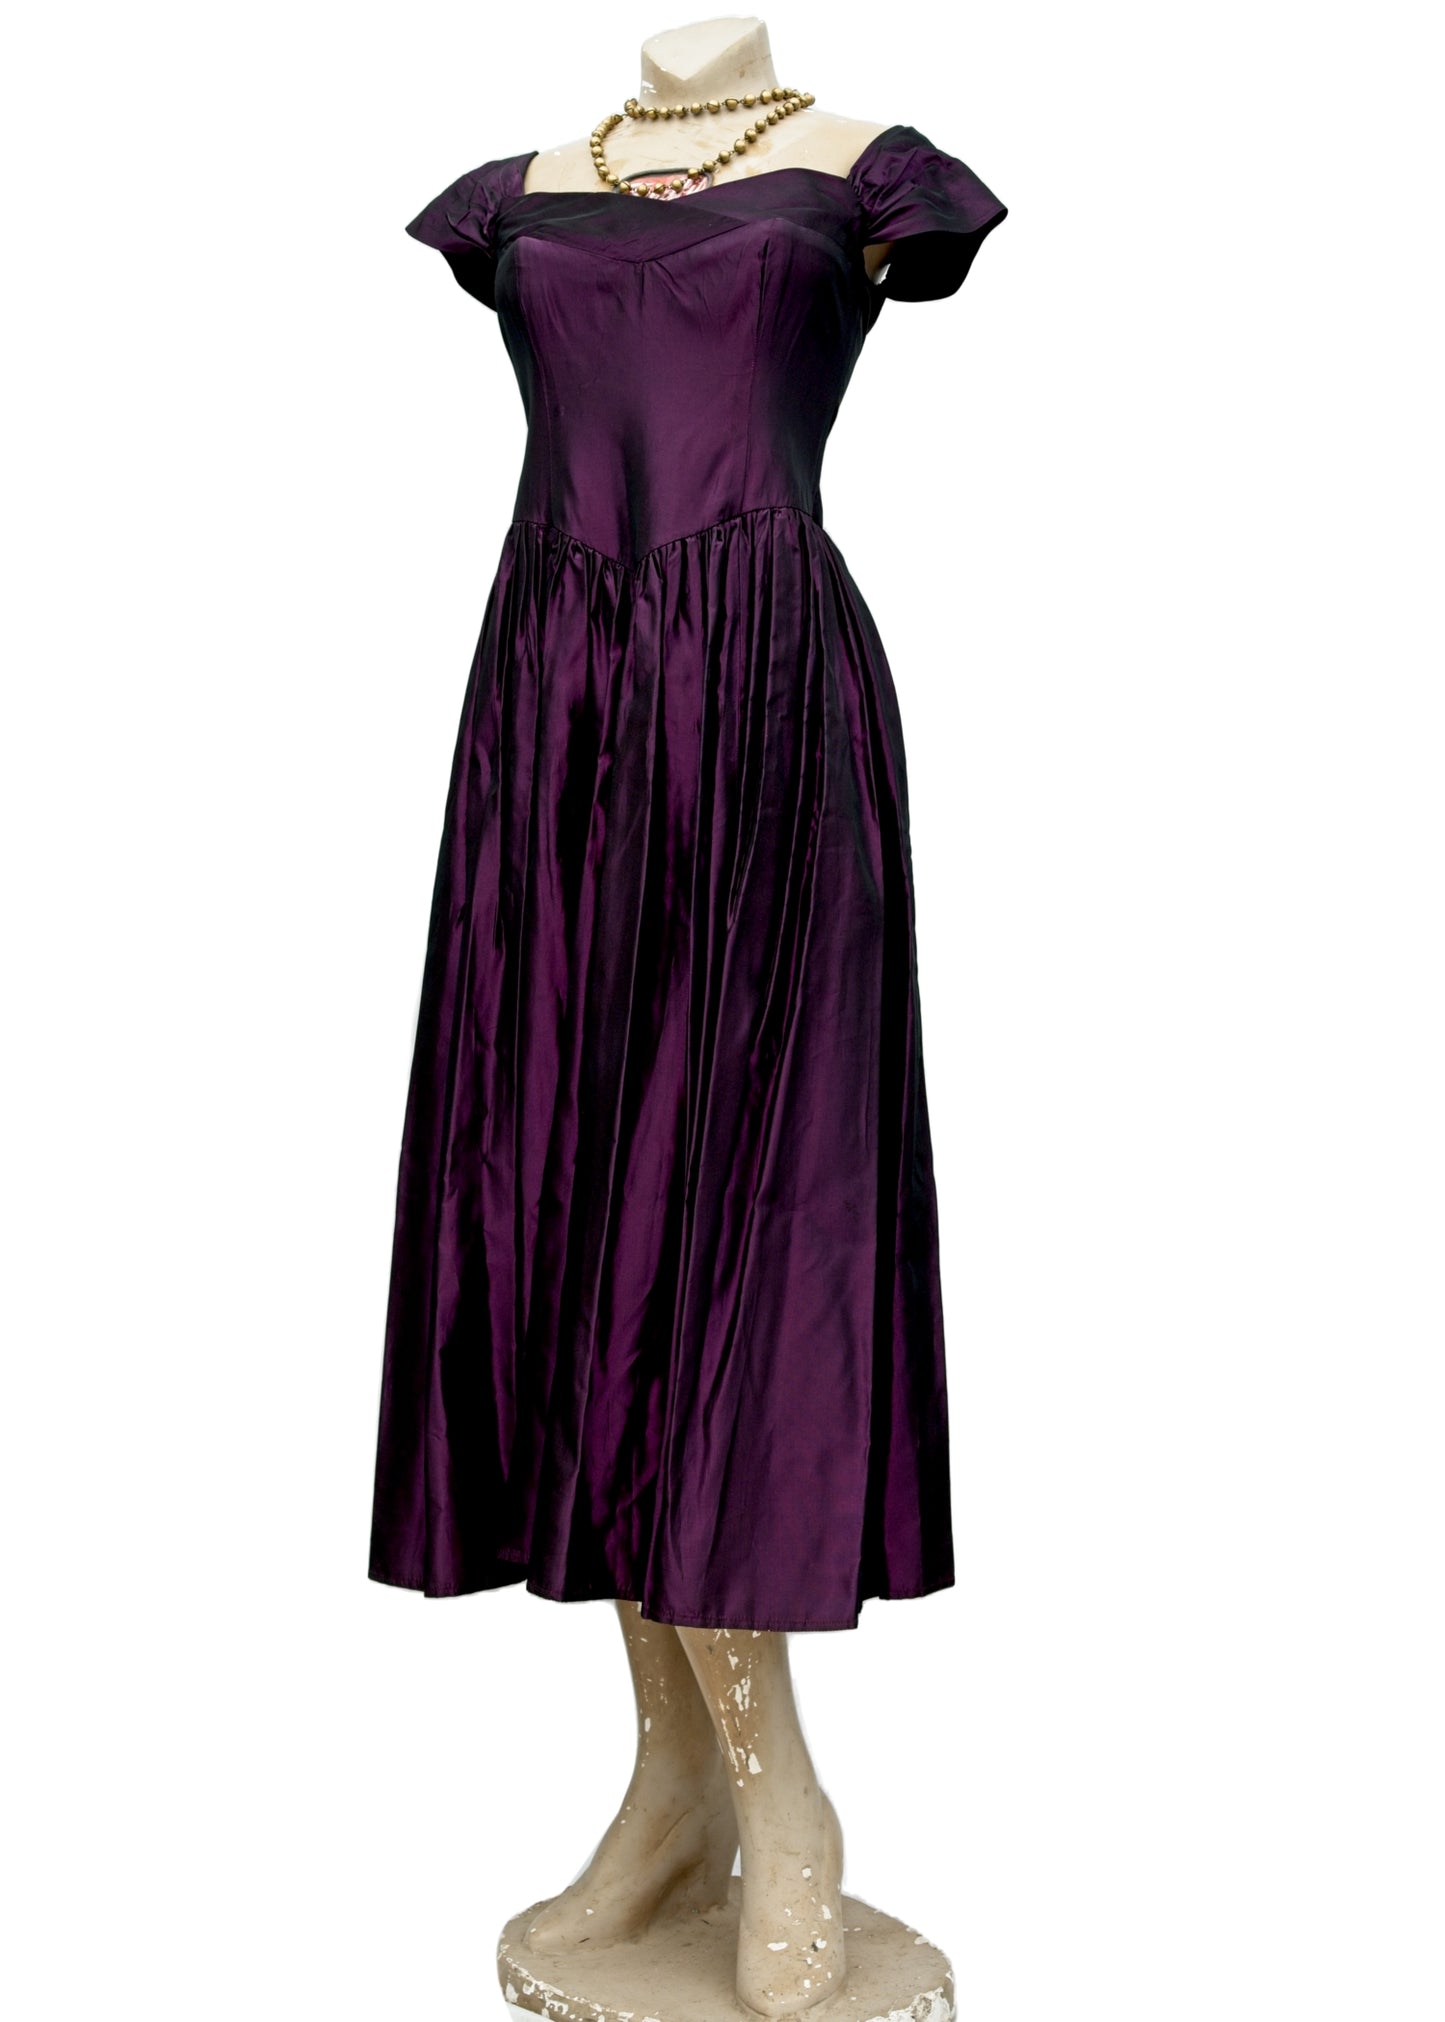 Vintage 80s Purple Taffeta Party Cocktail Dress